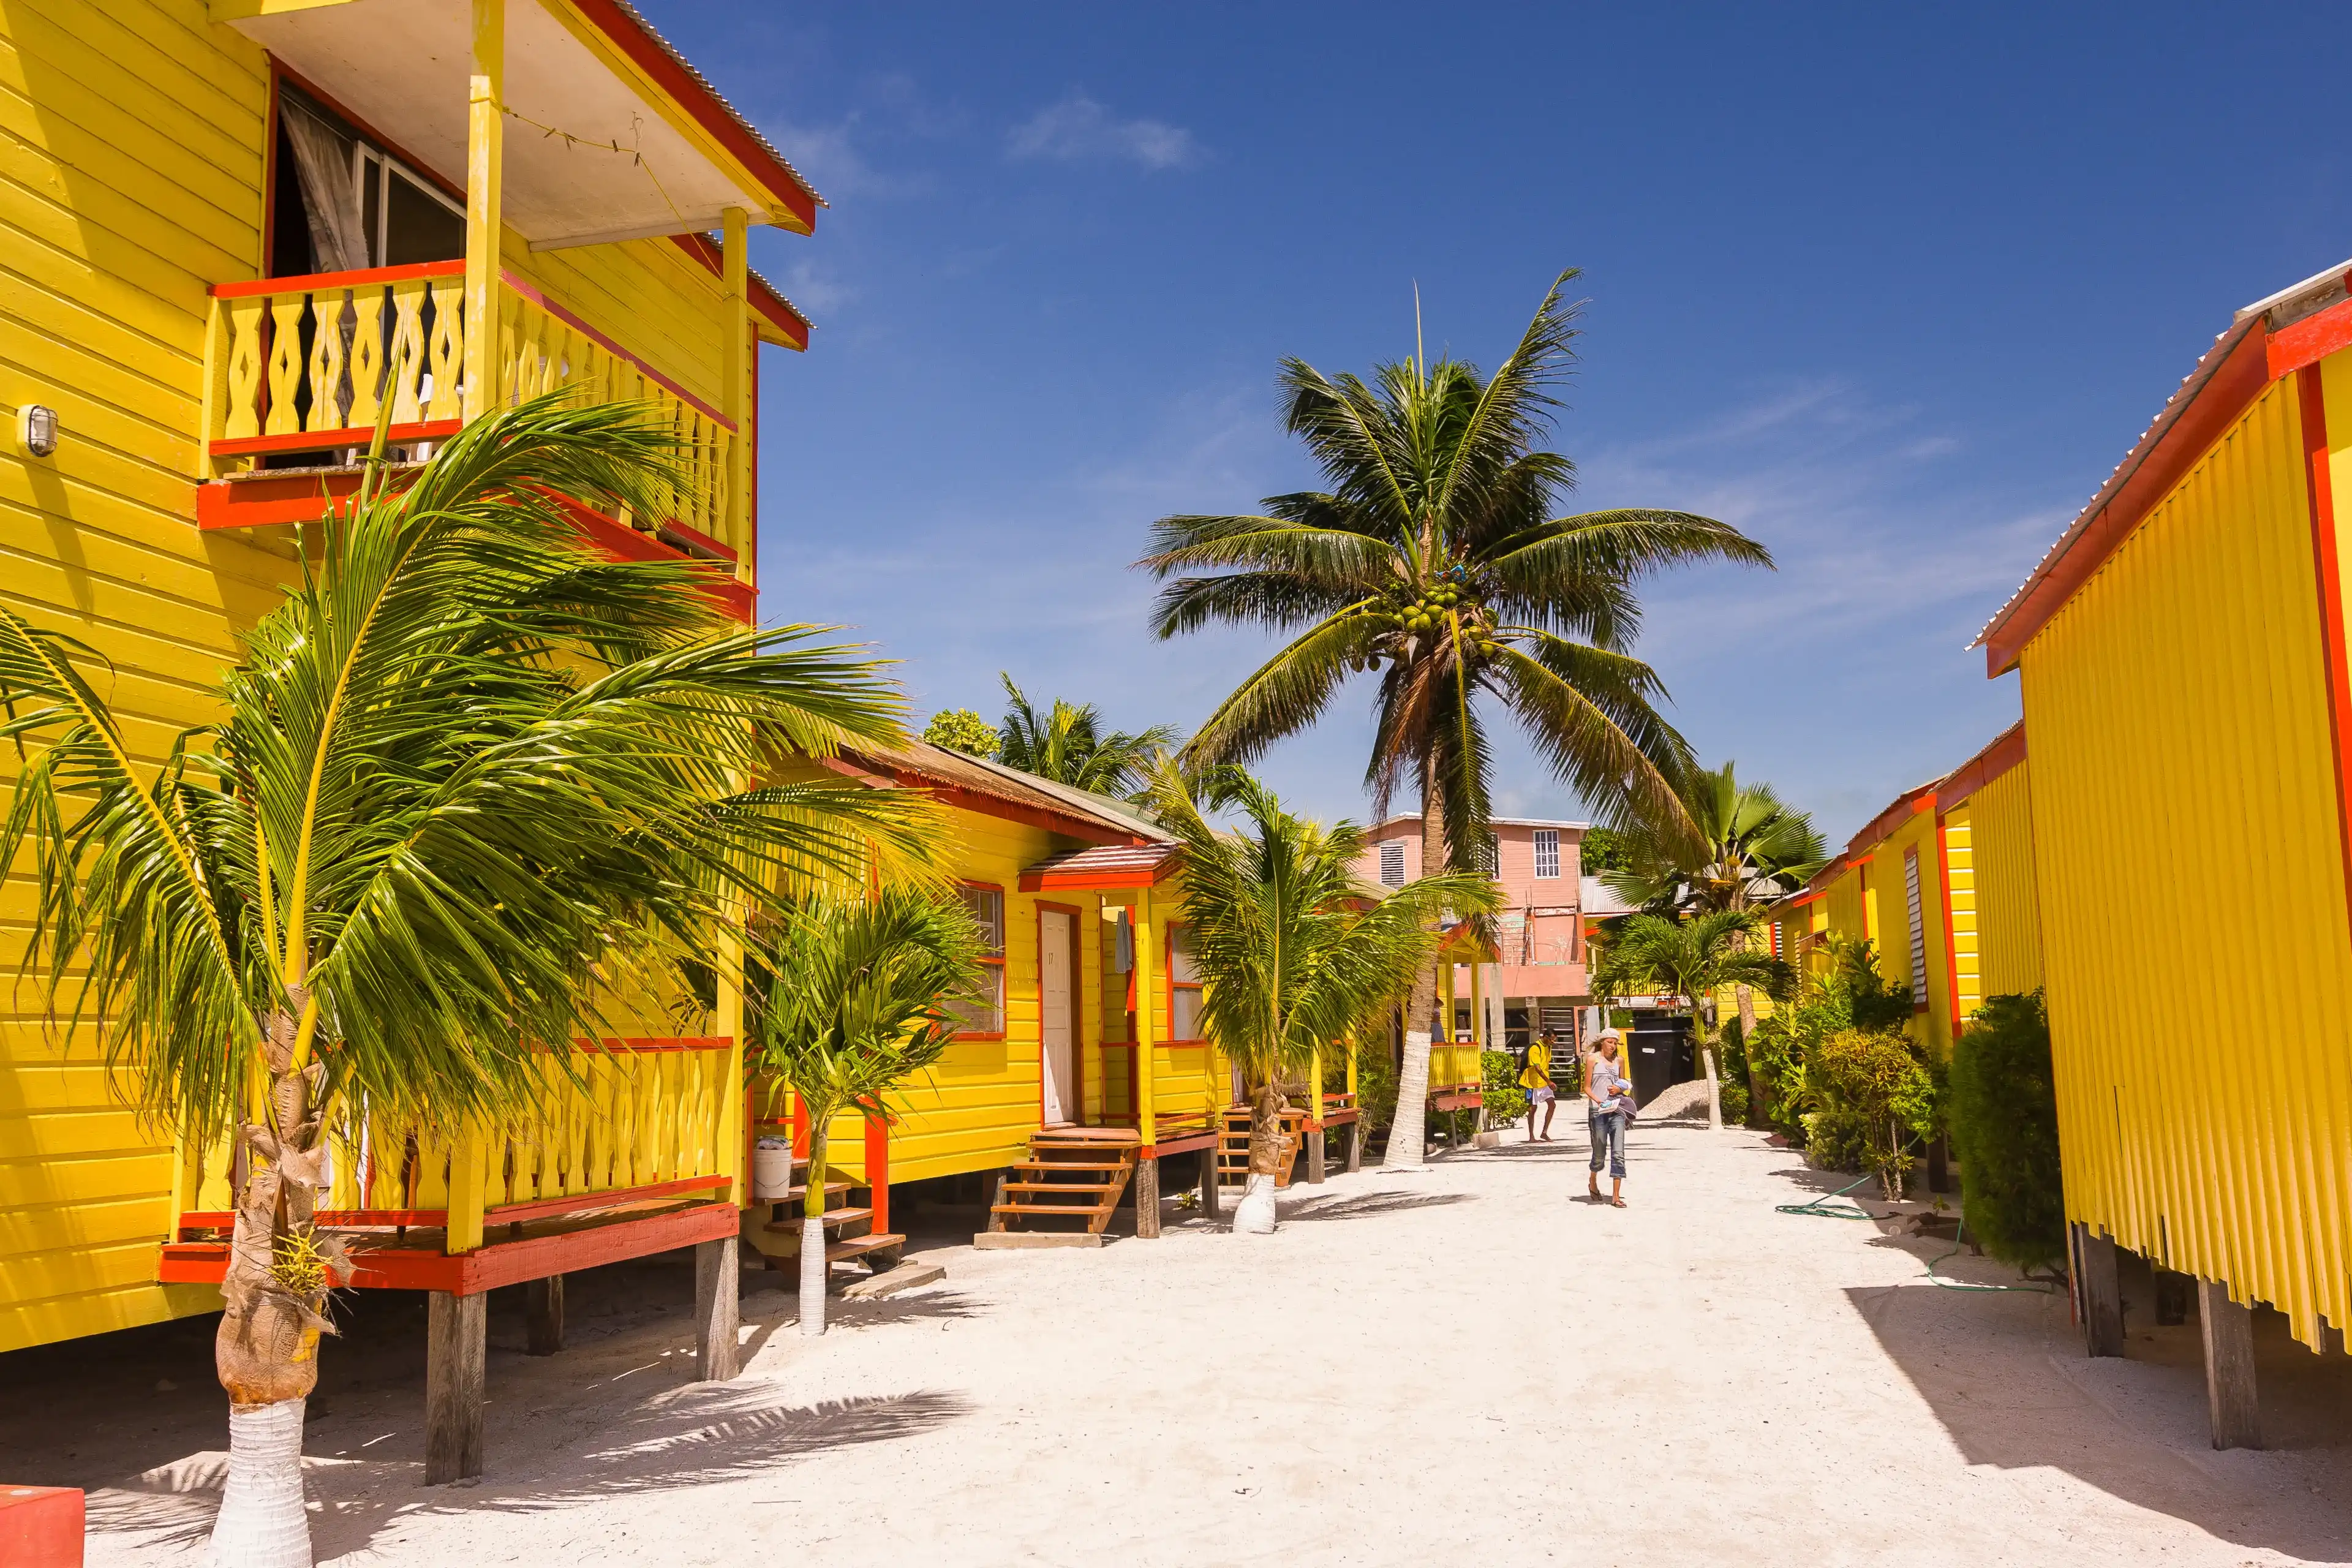 Best Caye Caulker hotels. Cheap hotels in Caye Caulker, Belize